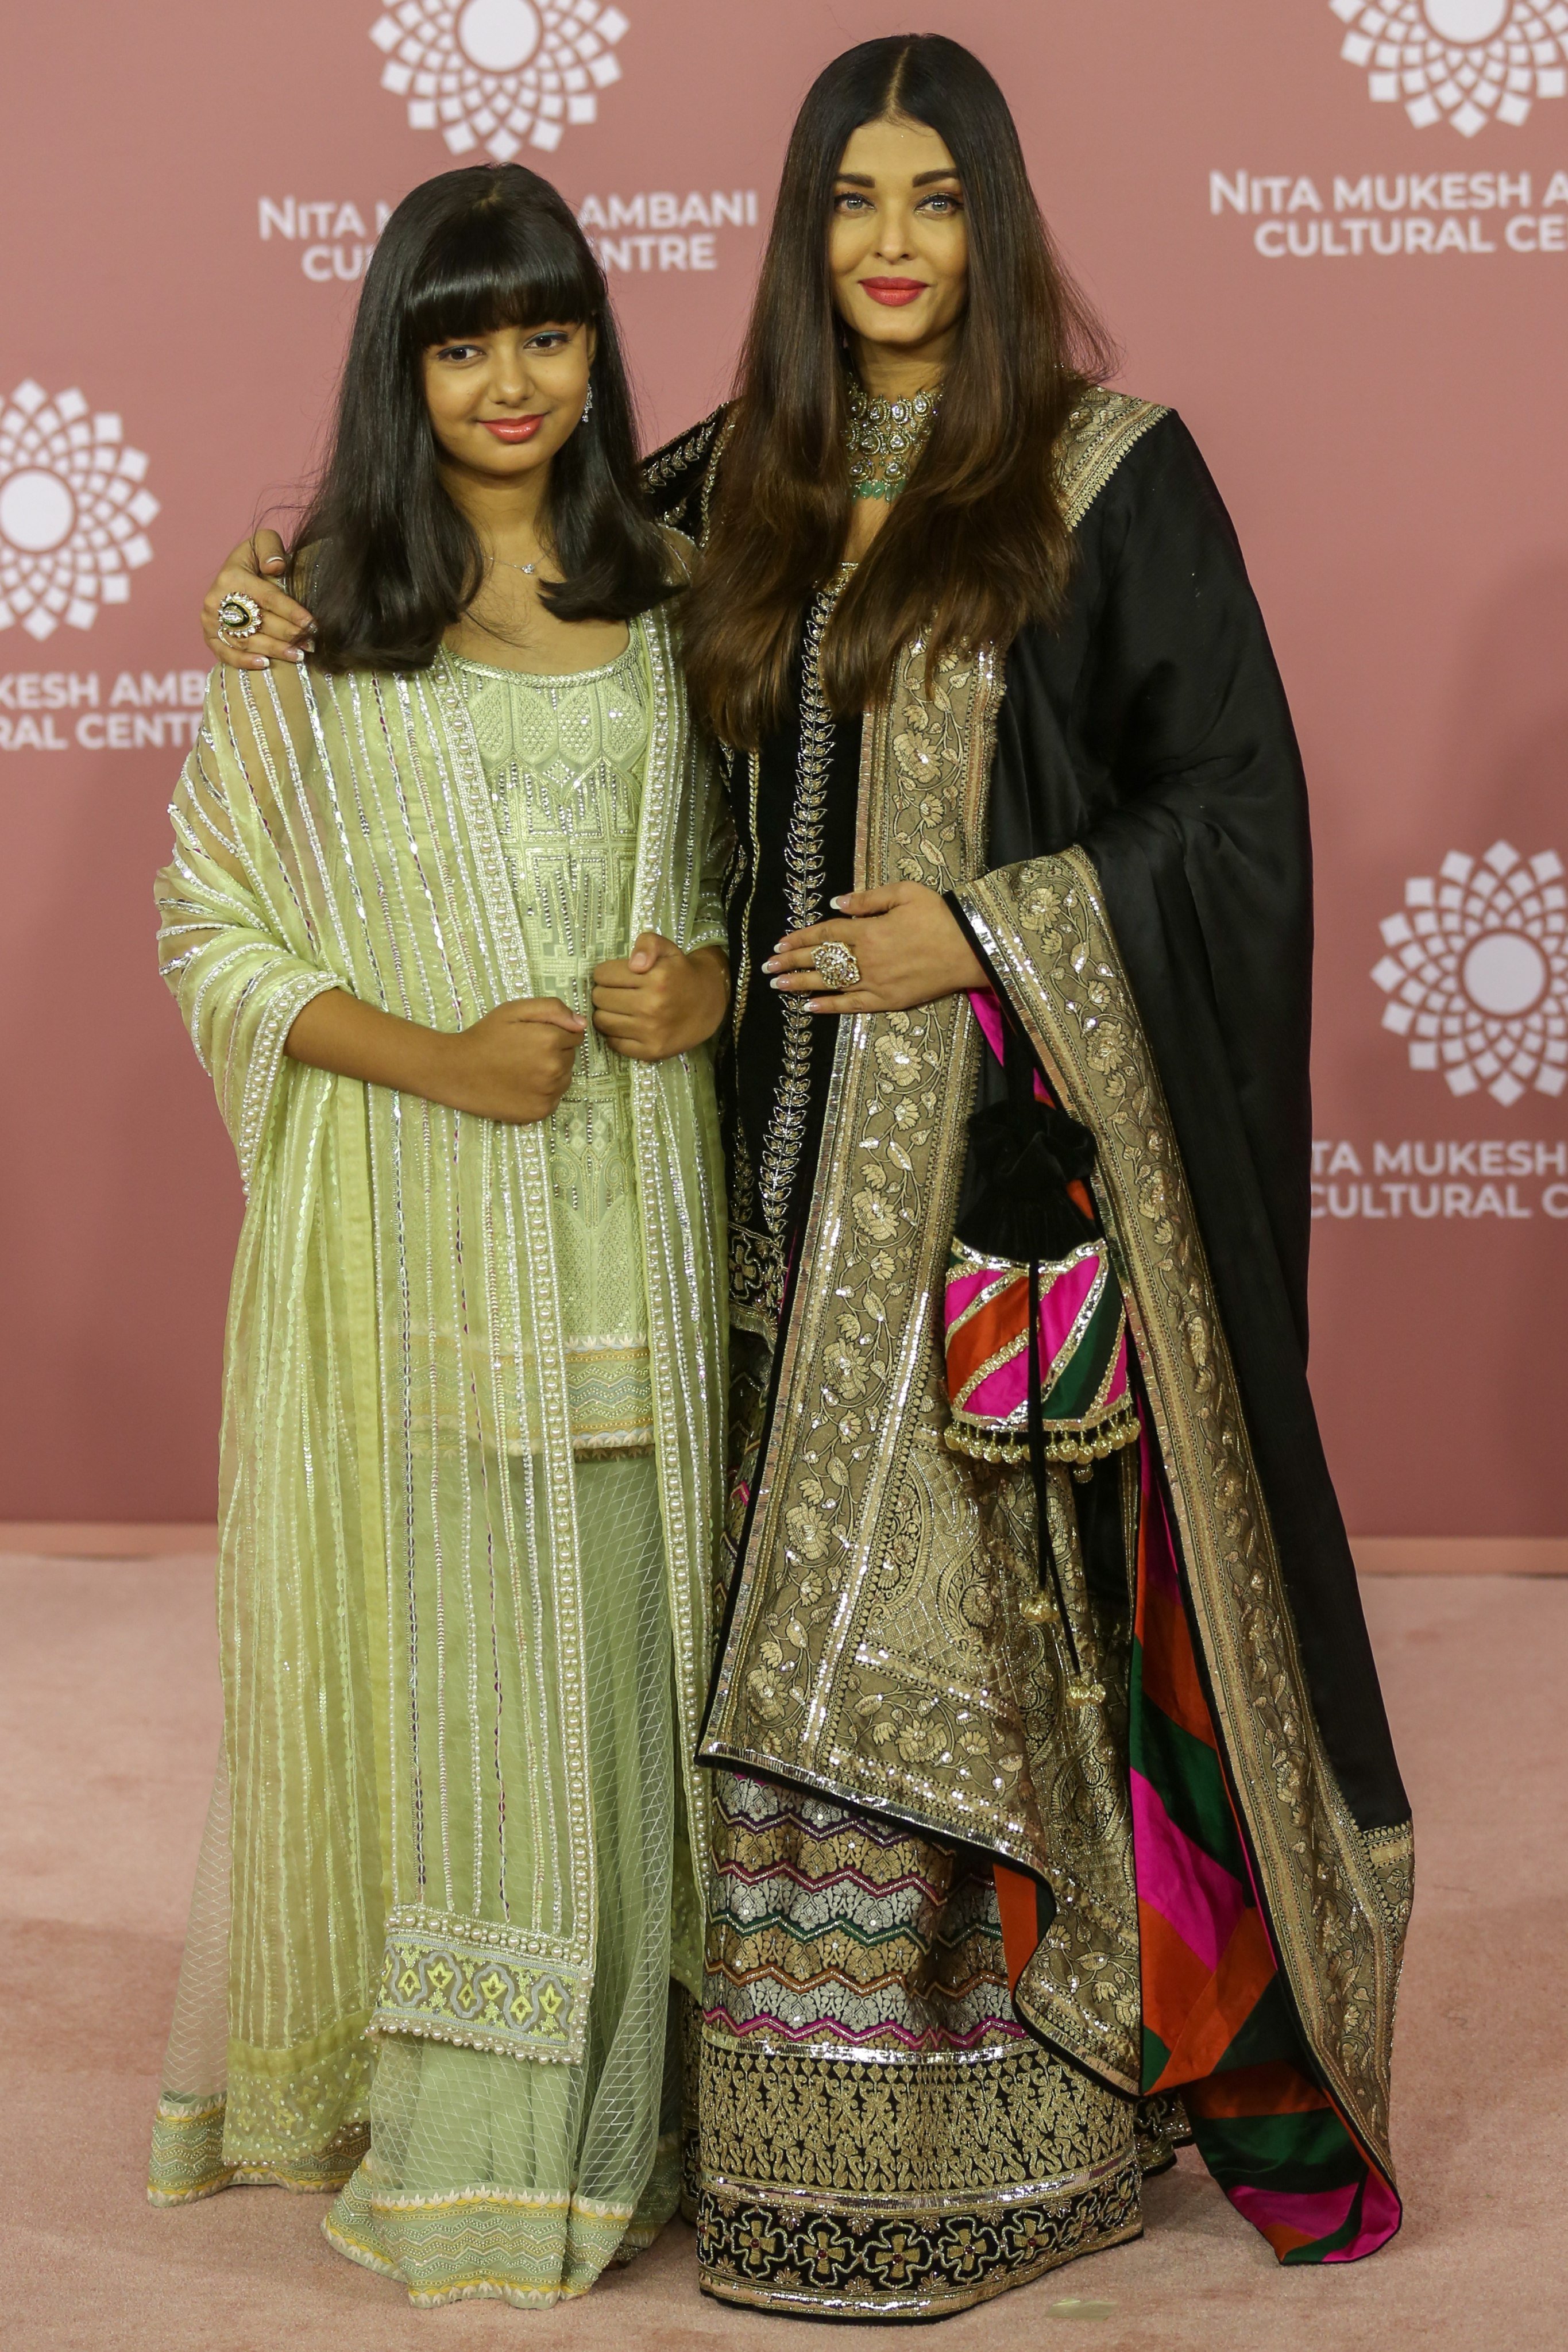 Aaradhya Bachchan, granddaughter of Bollywood superstar Amitabh Bachchan, with her mother Aishwarya Rai Bachchan. Photo: EPA-EFE